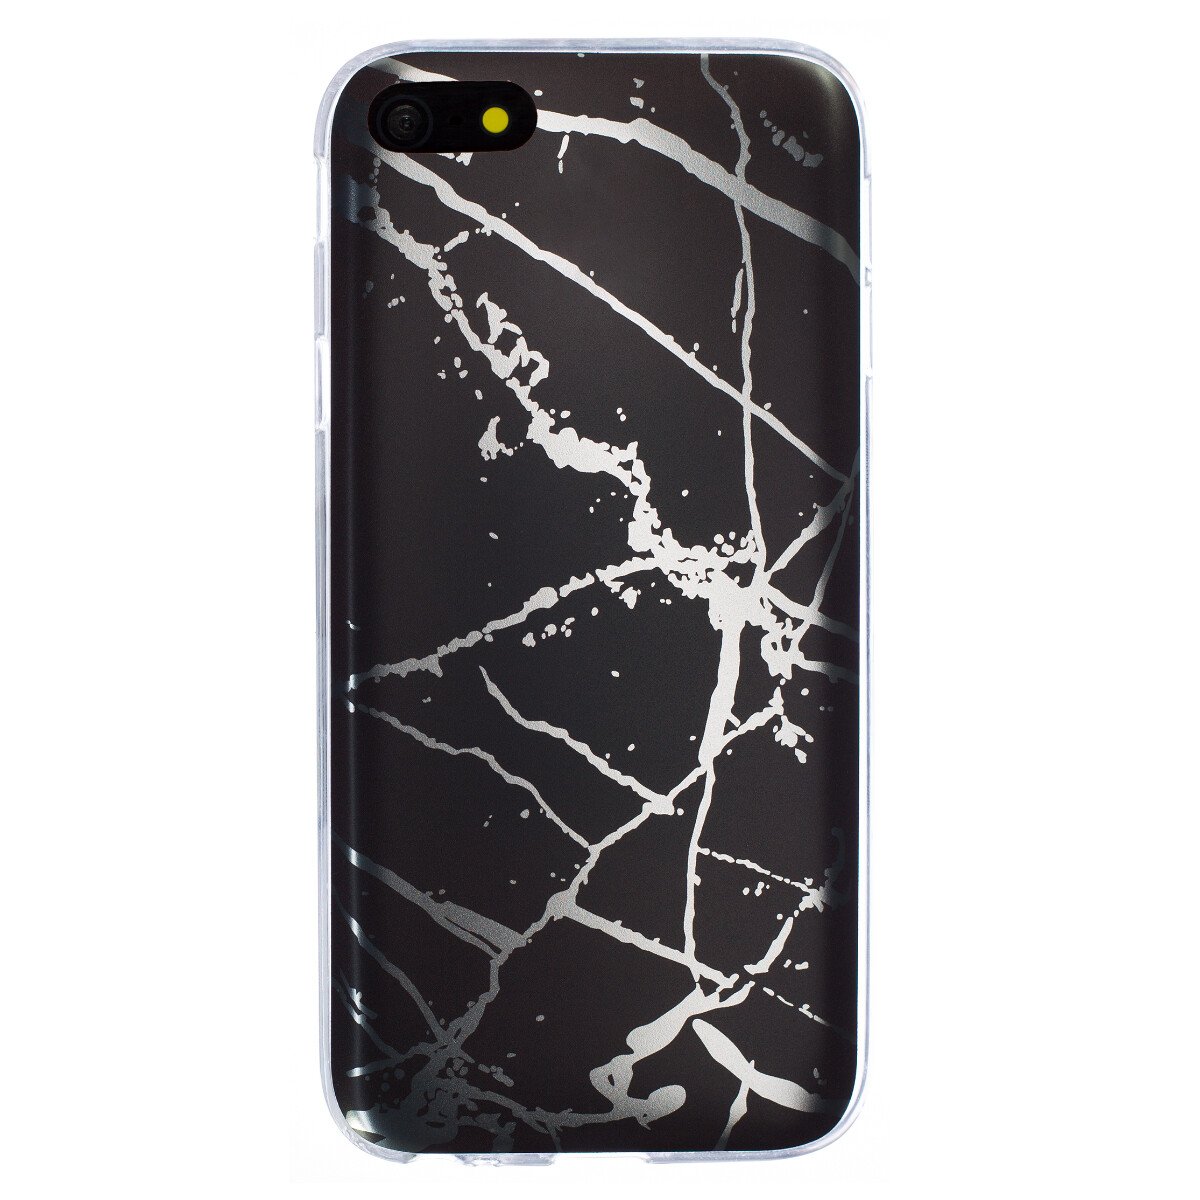 Husa Fashion iPhone 5/5s, Marble Negru thumb